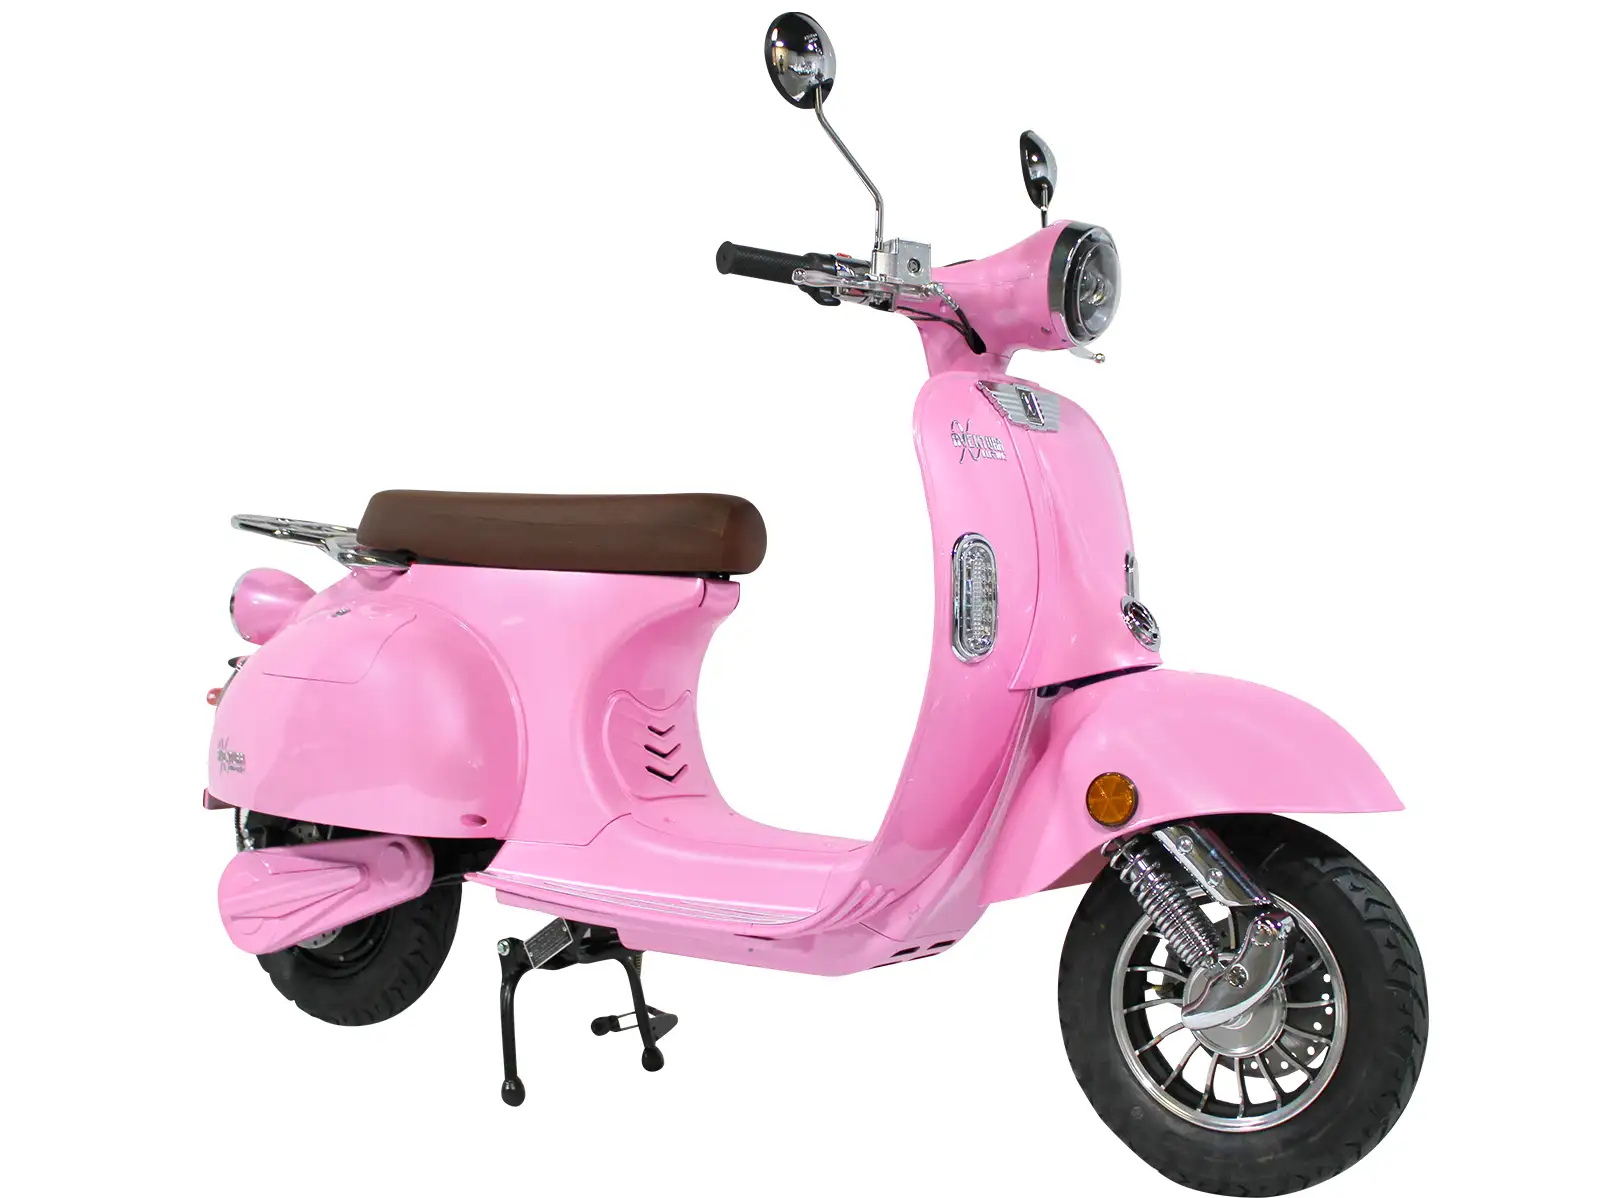 pink vespa scooter